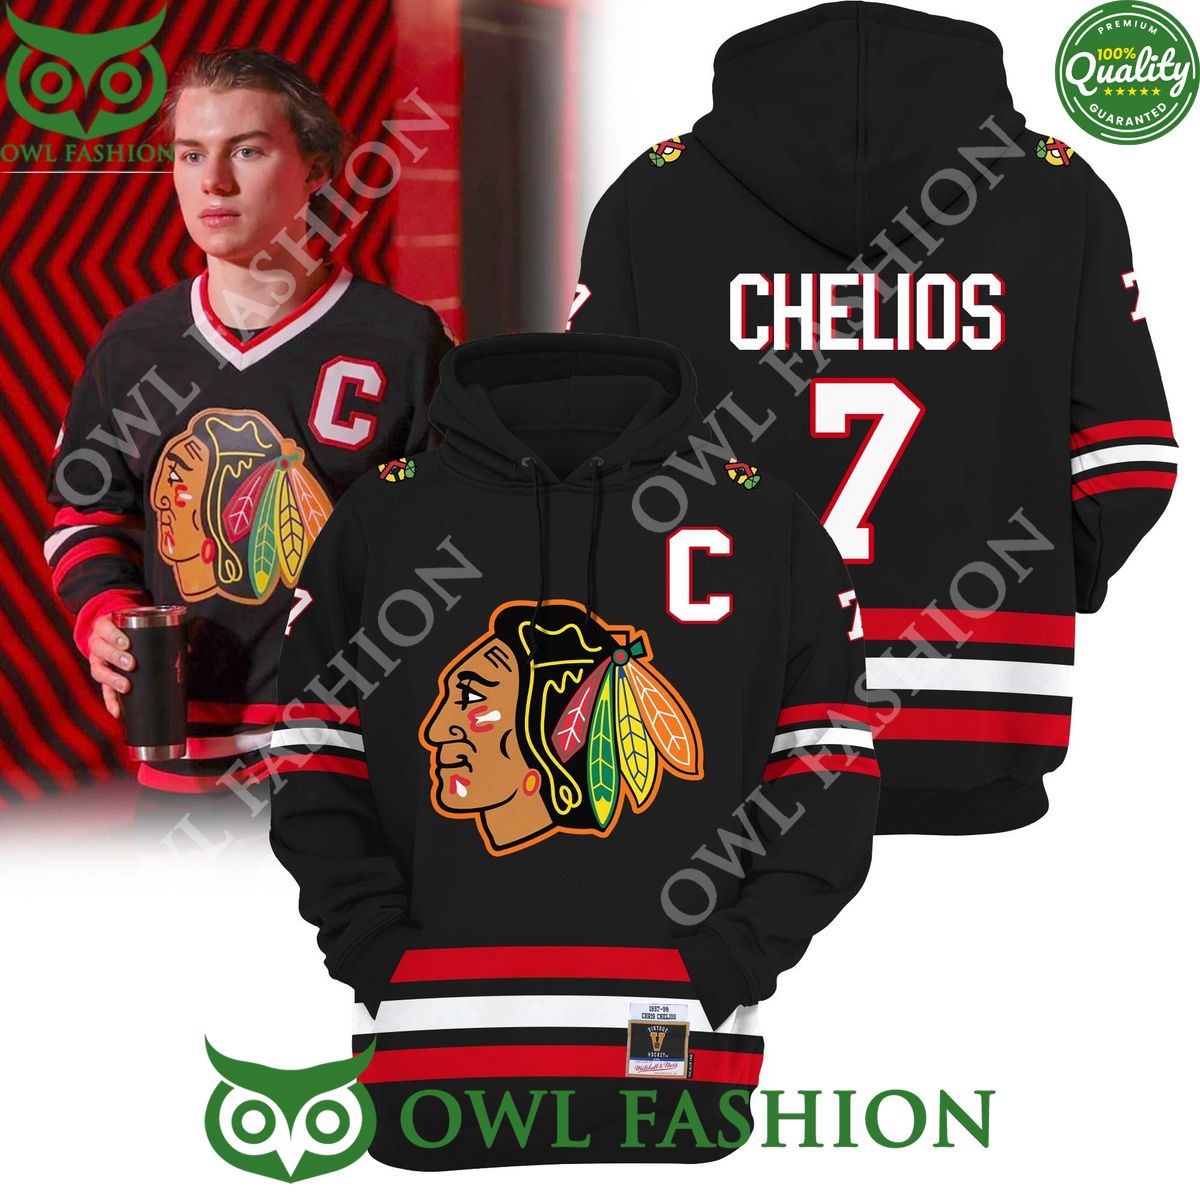 NHL Chris Chelios Chicago Blackhawks ice hockey team Hoodie Rocking picture